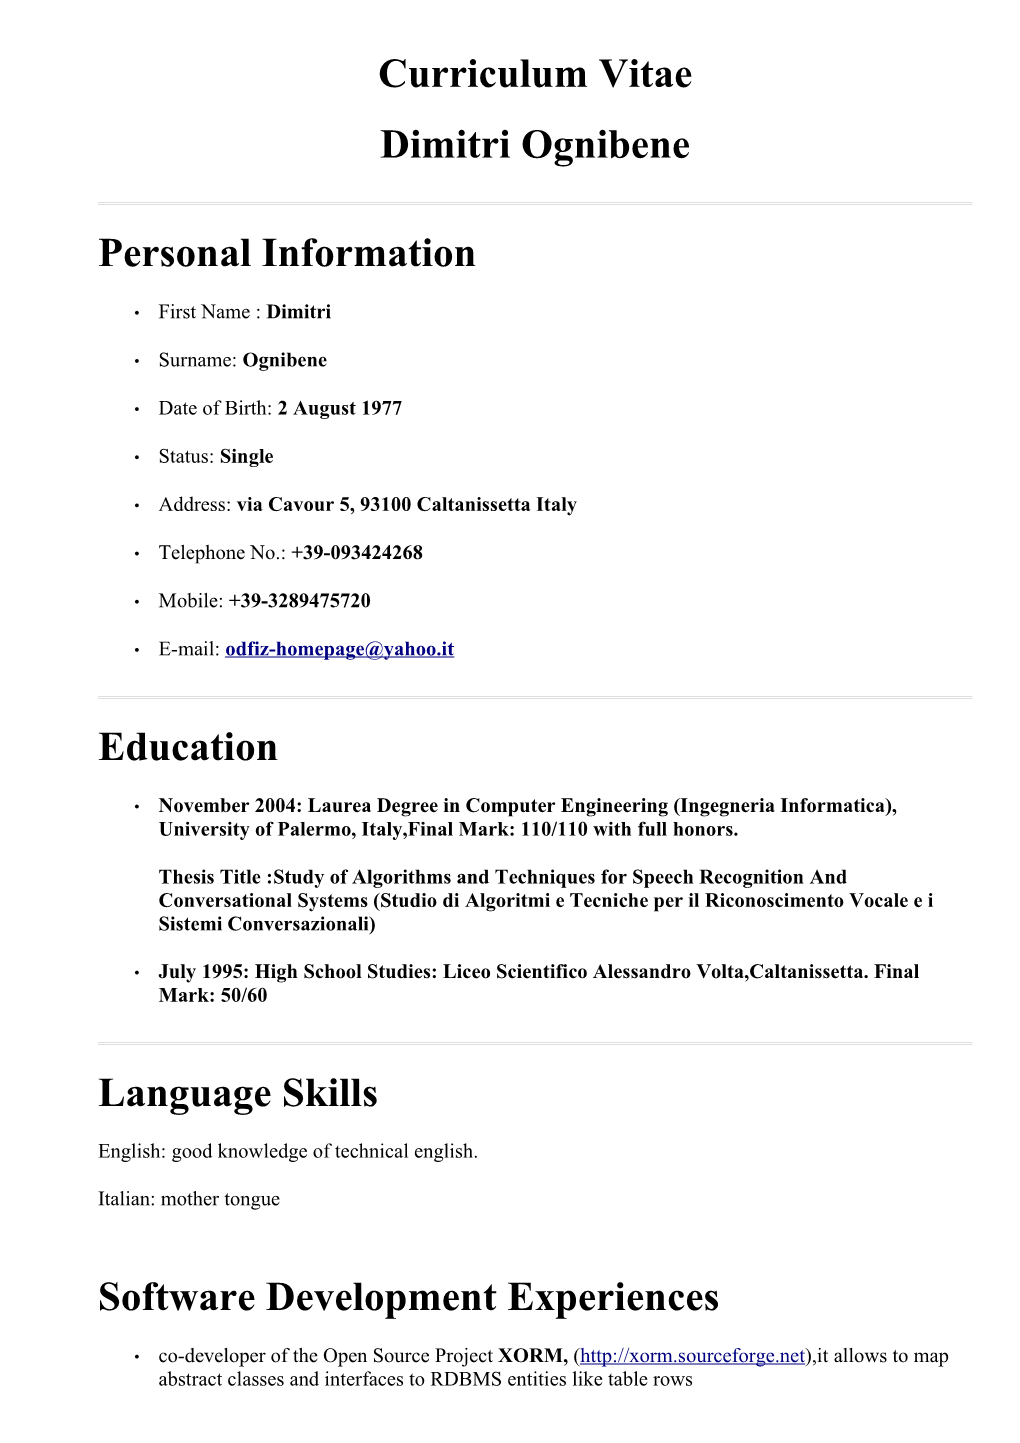 Curriculum Vitae Dimitri Ognibene Personal Information Education Language Skills Software Development Experiences